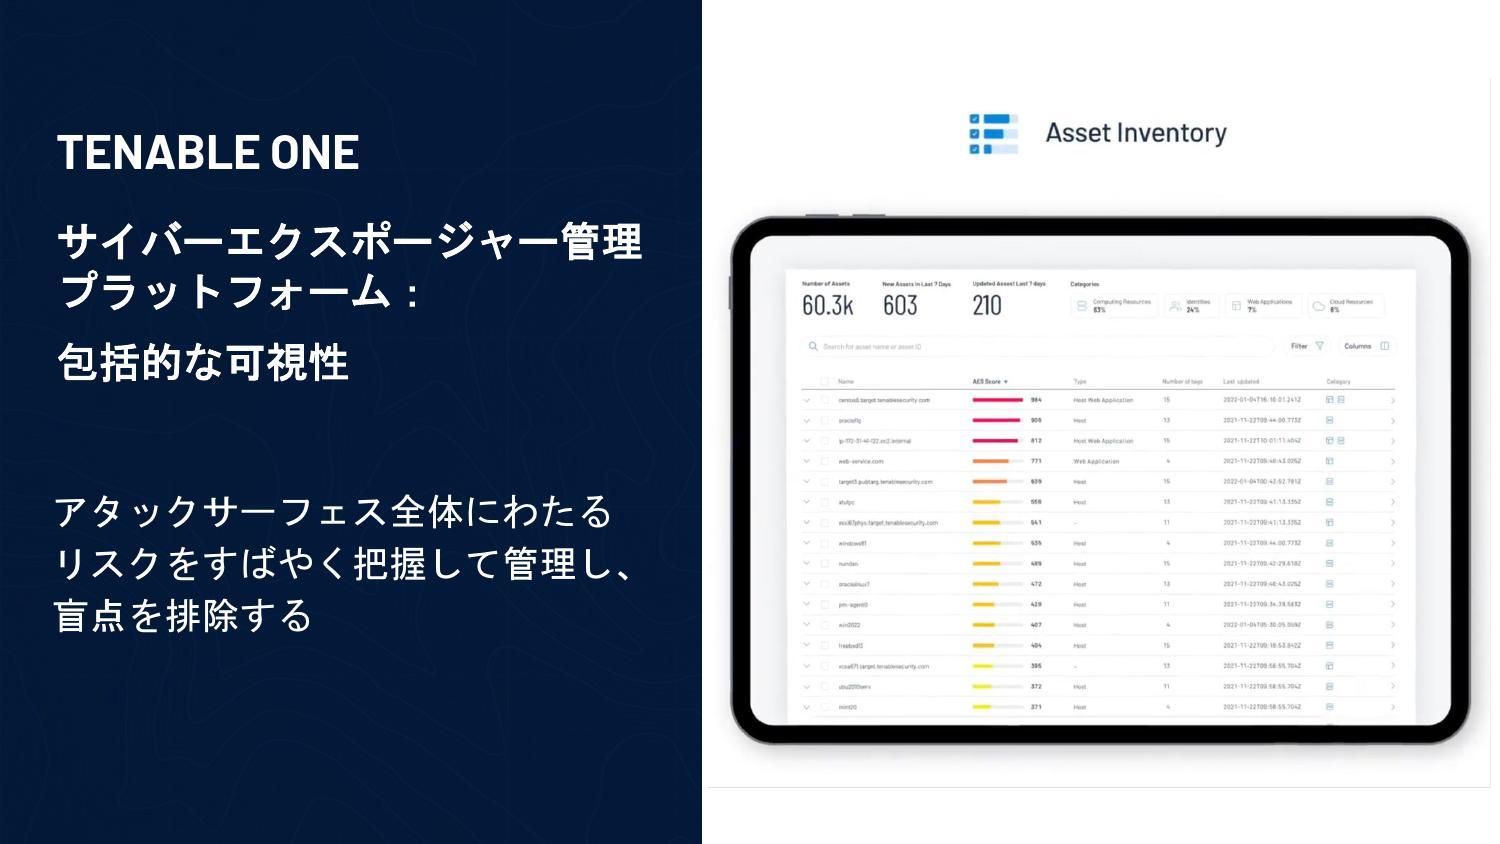 Tenable One̊TvmNbNĊgn oFTenable Network Security Japan